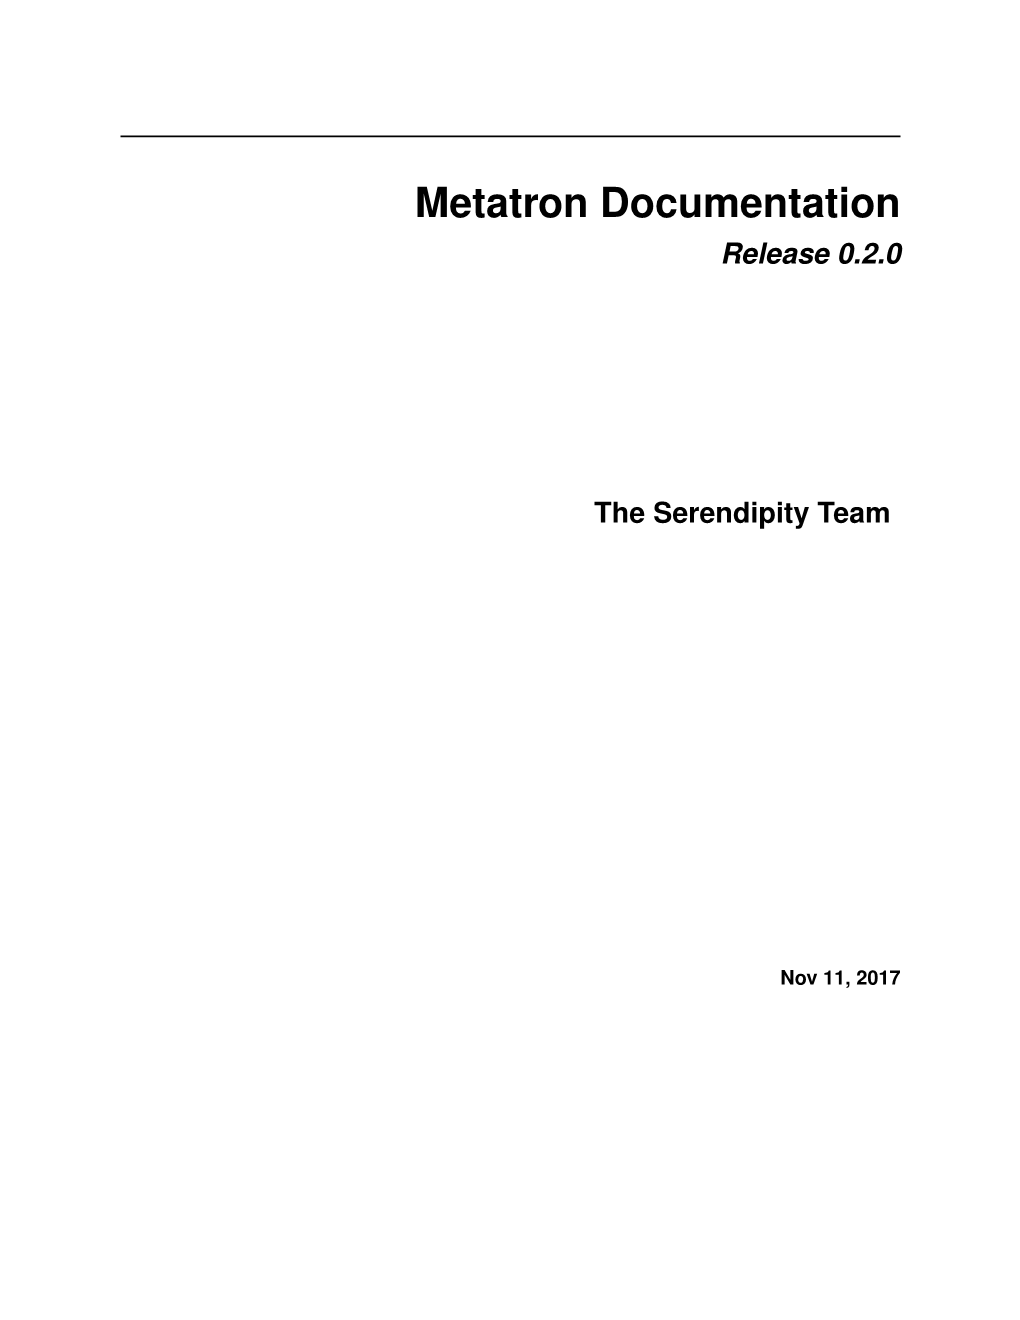 Metatron Documentation Release 0.2.0